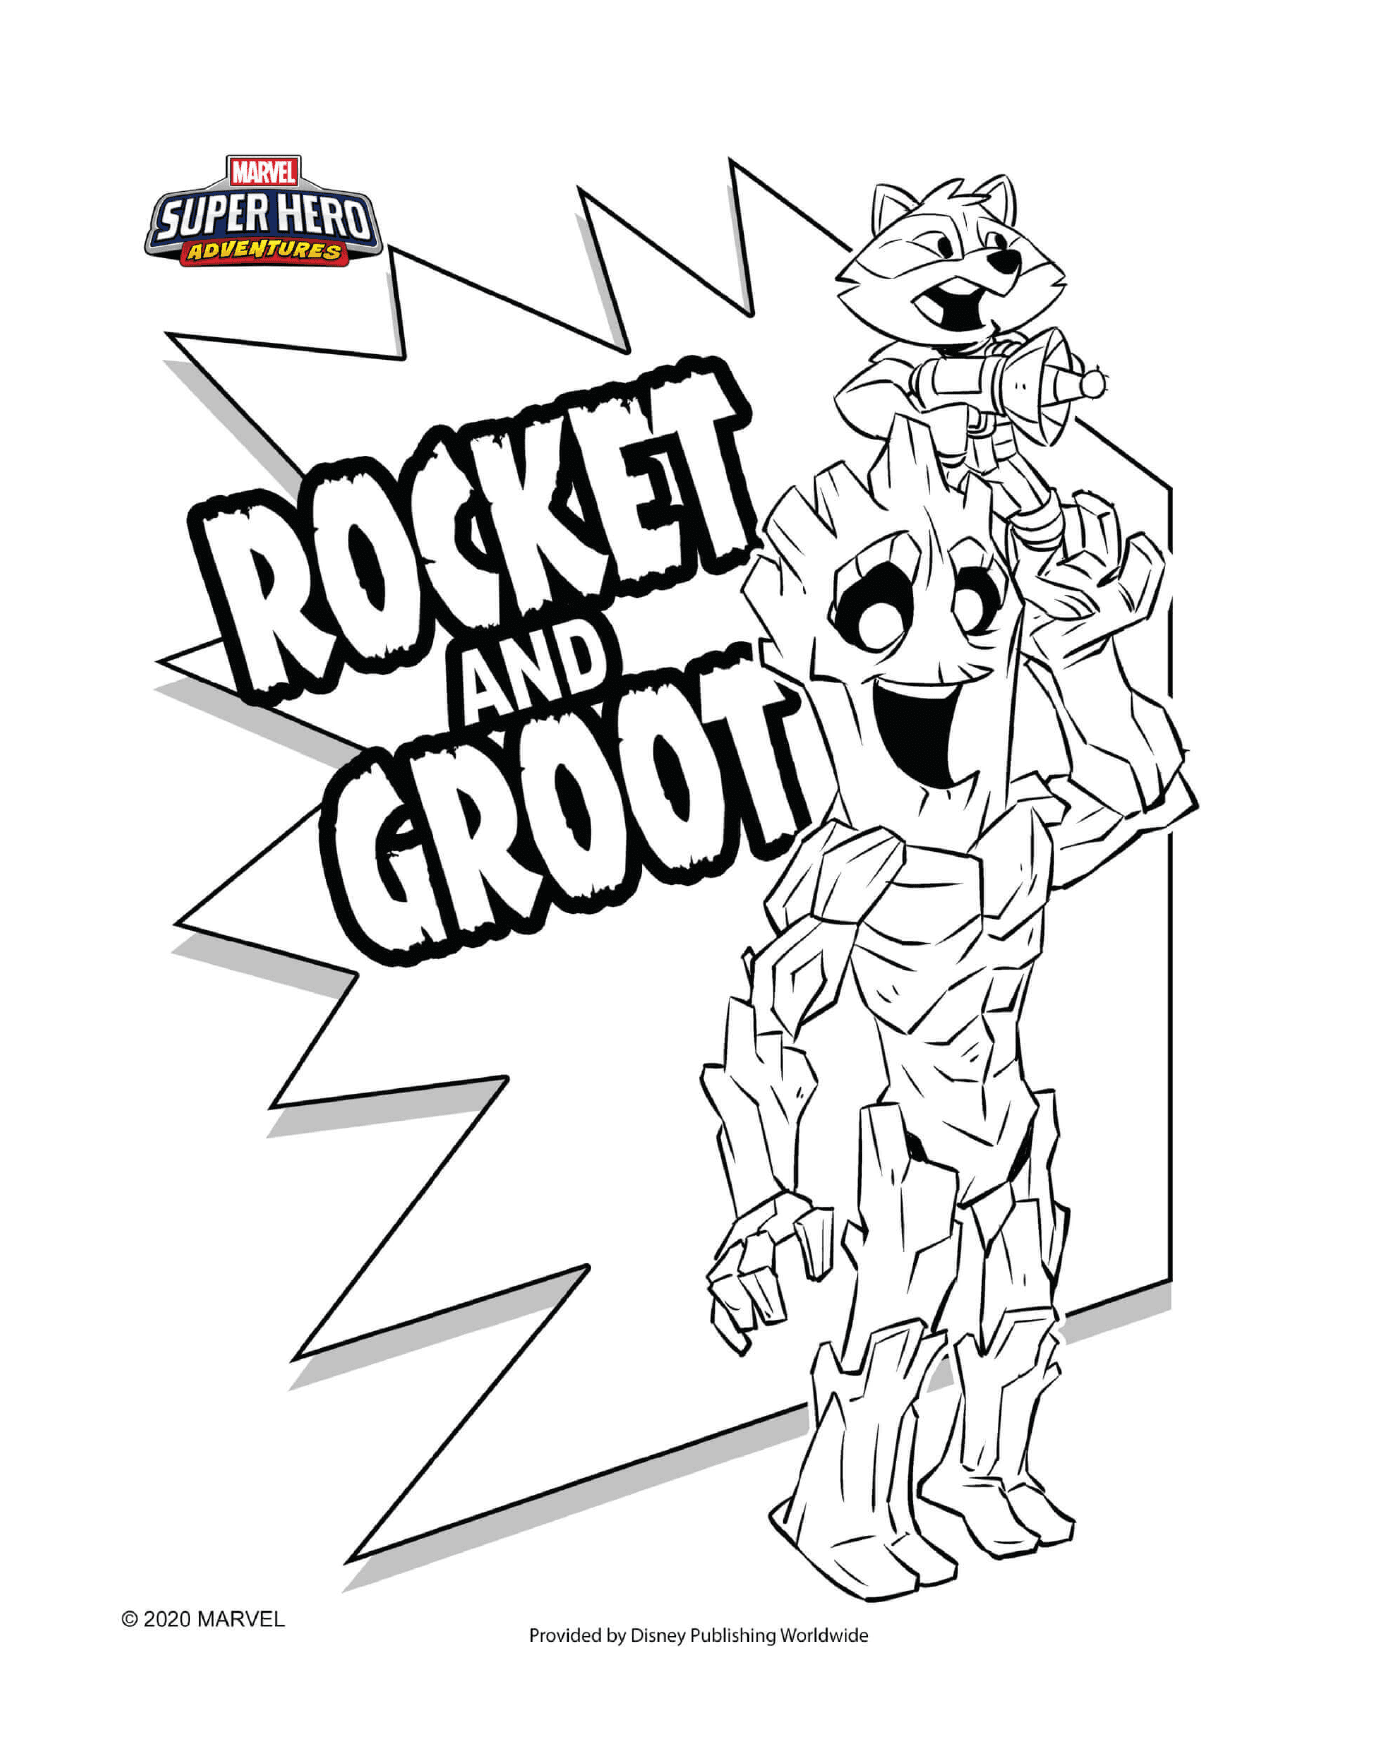 Rocket and Groot Marvel Super Heros